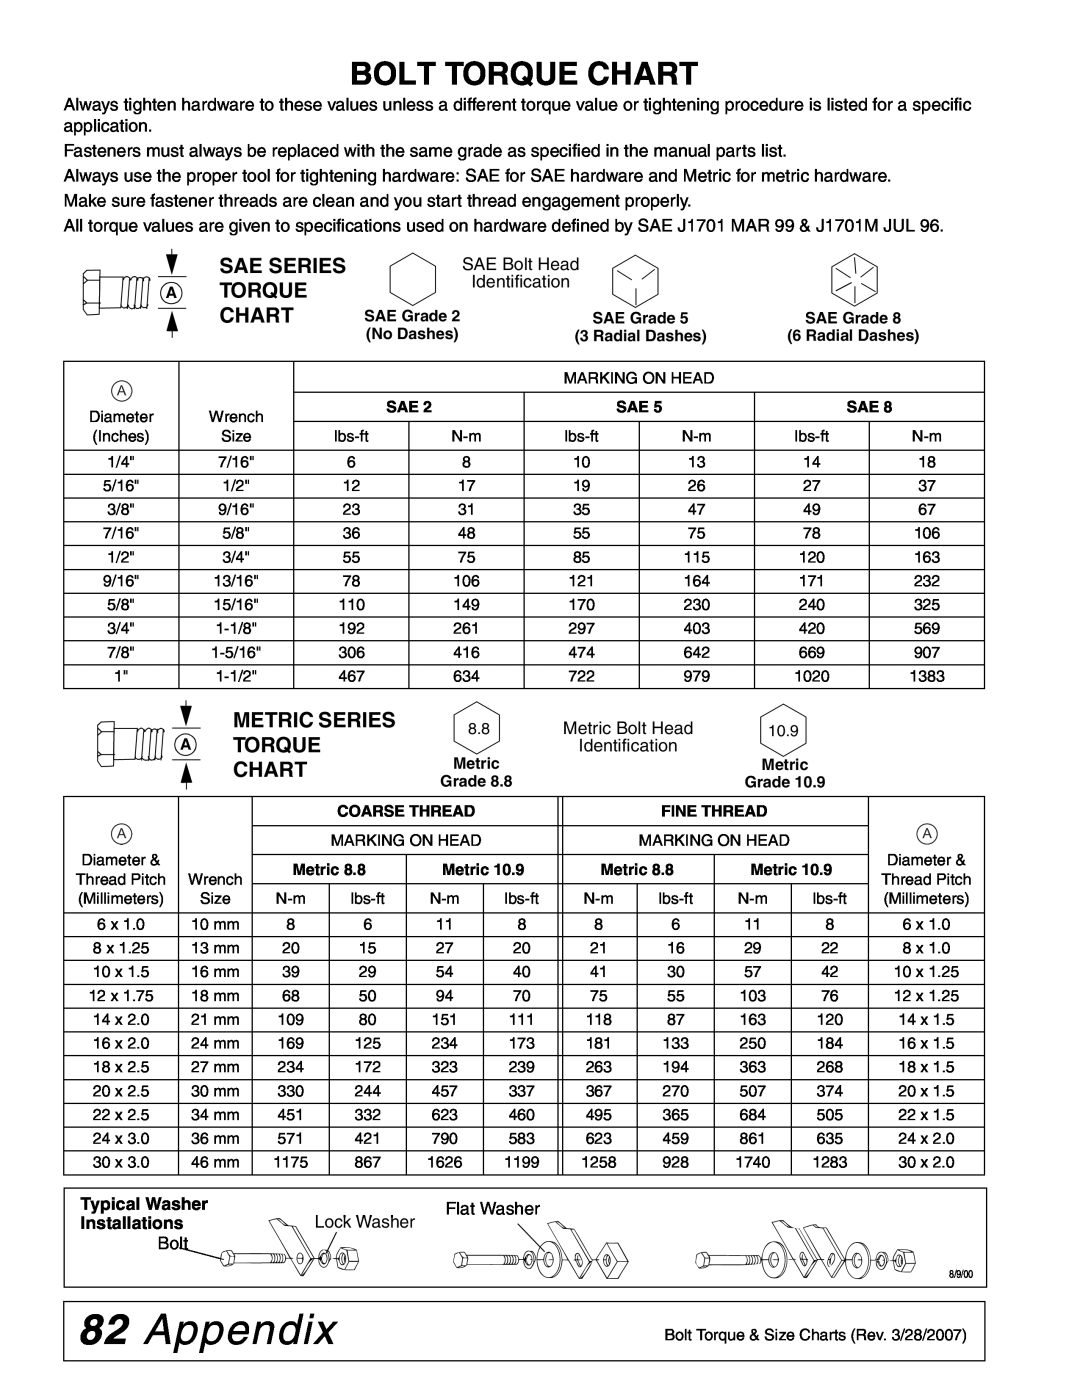 Woods Equipment BW126XHDQ, BW180XHDQ manual 82Appendix, Bolt Torque Chart, Sae Series A Torque Chart, Metric Series 